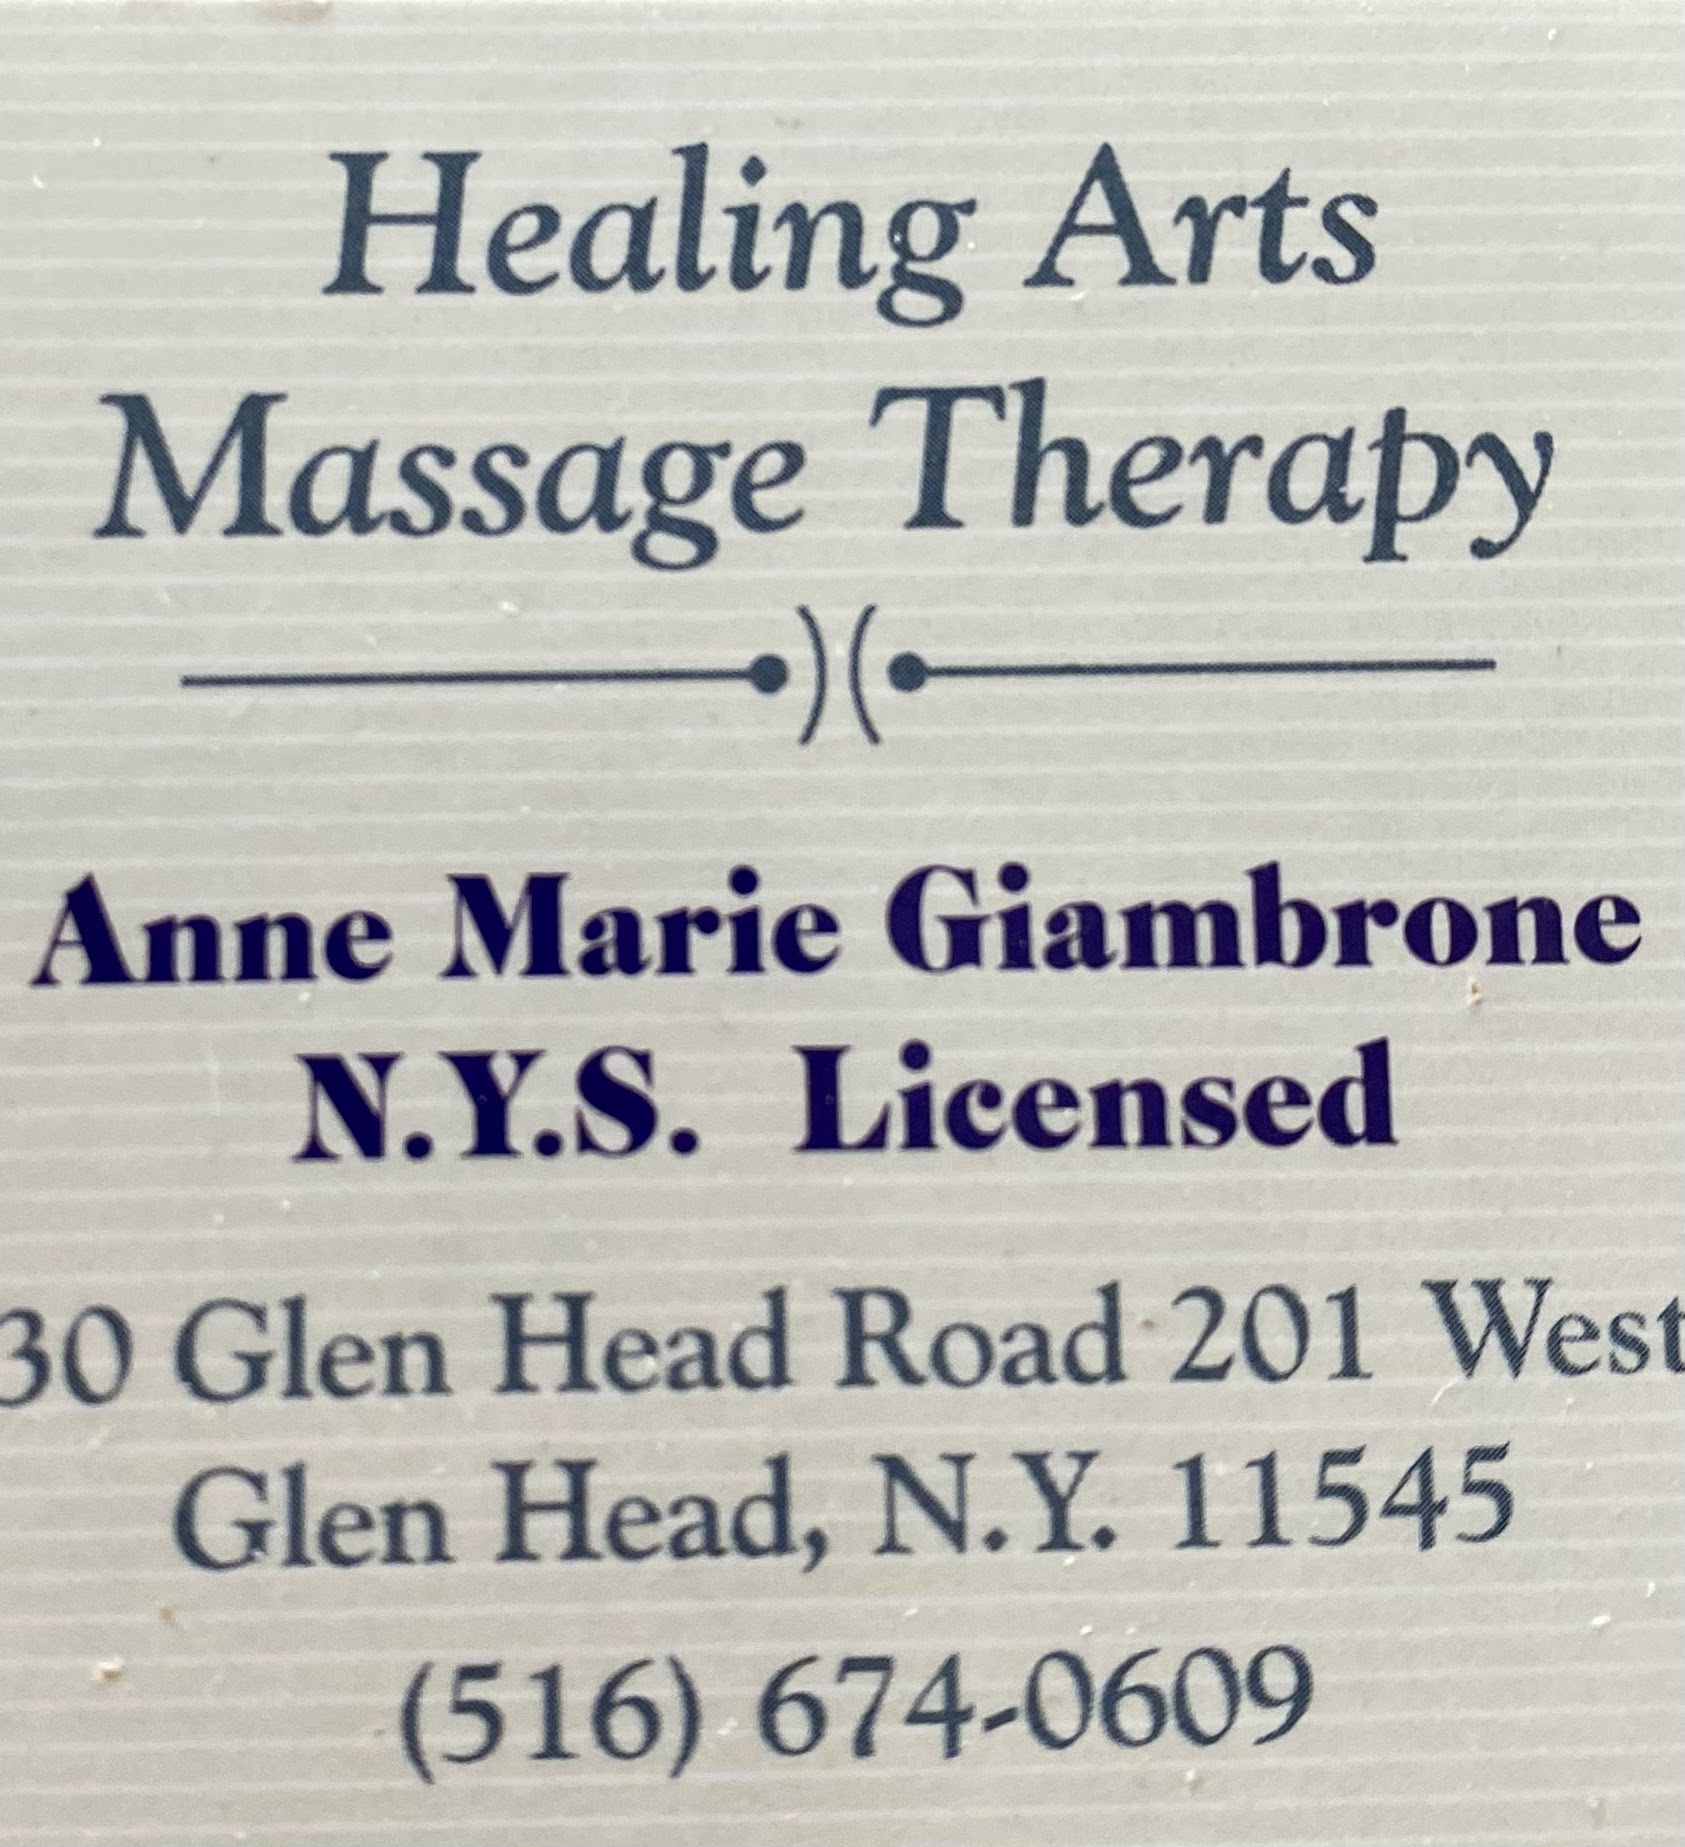 Healing Arts Massage Therapy 1009 Glen Cove Ave #6, Glen Head New York 11545